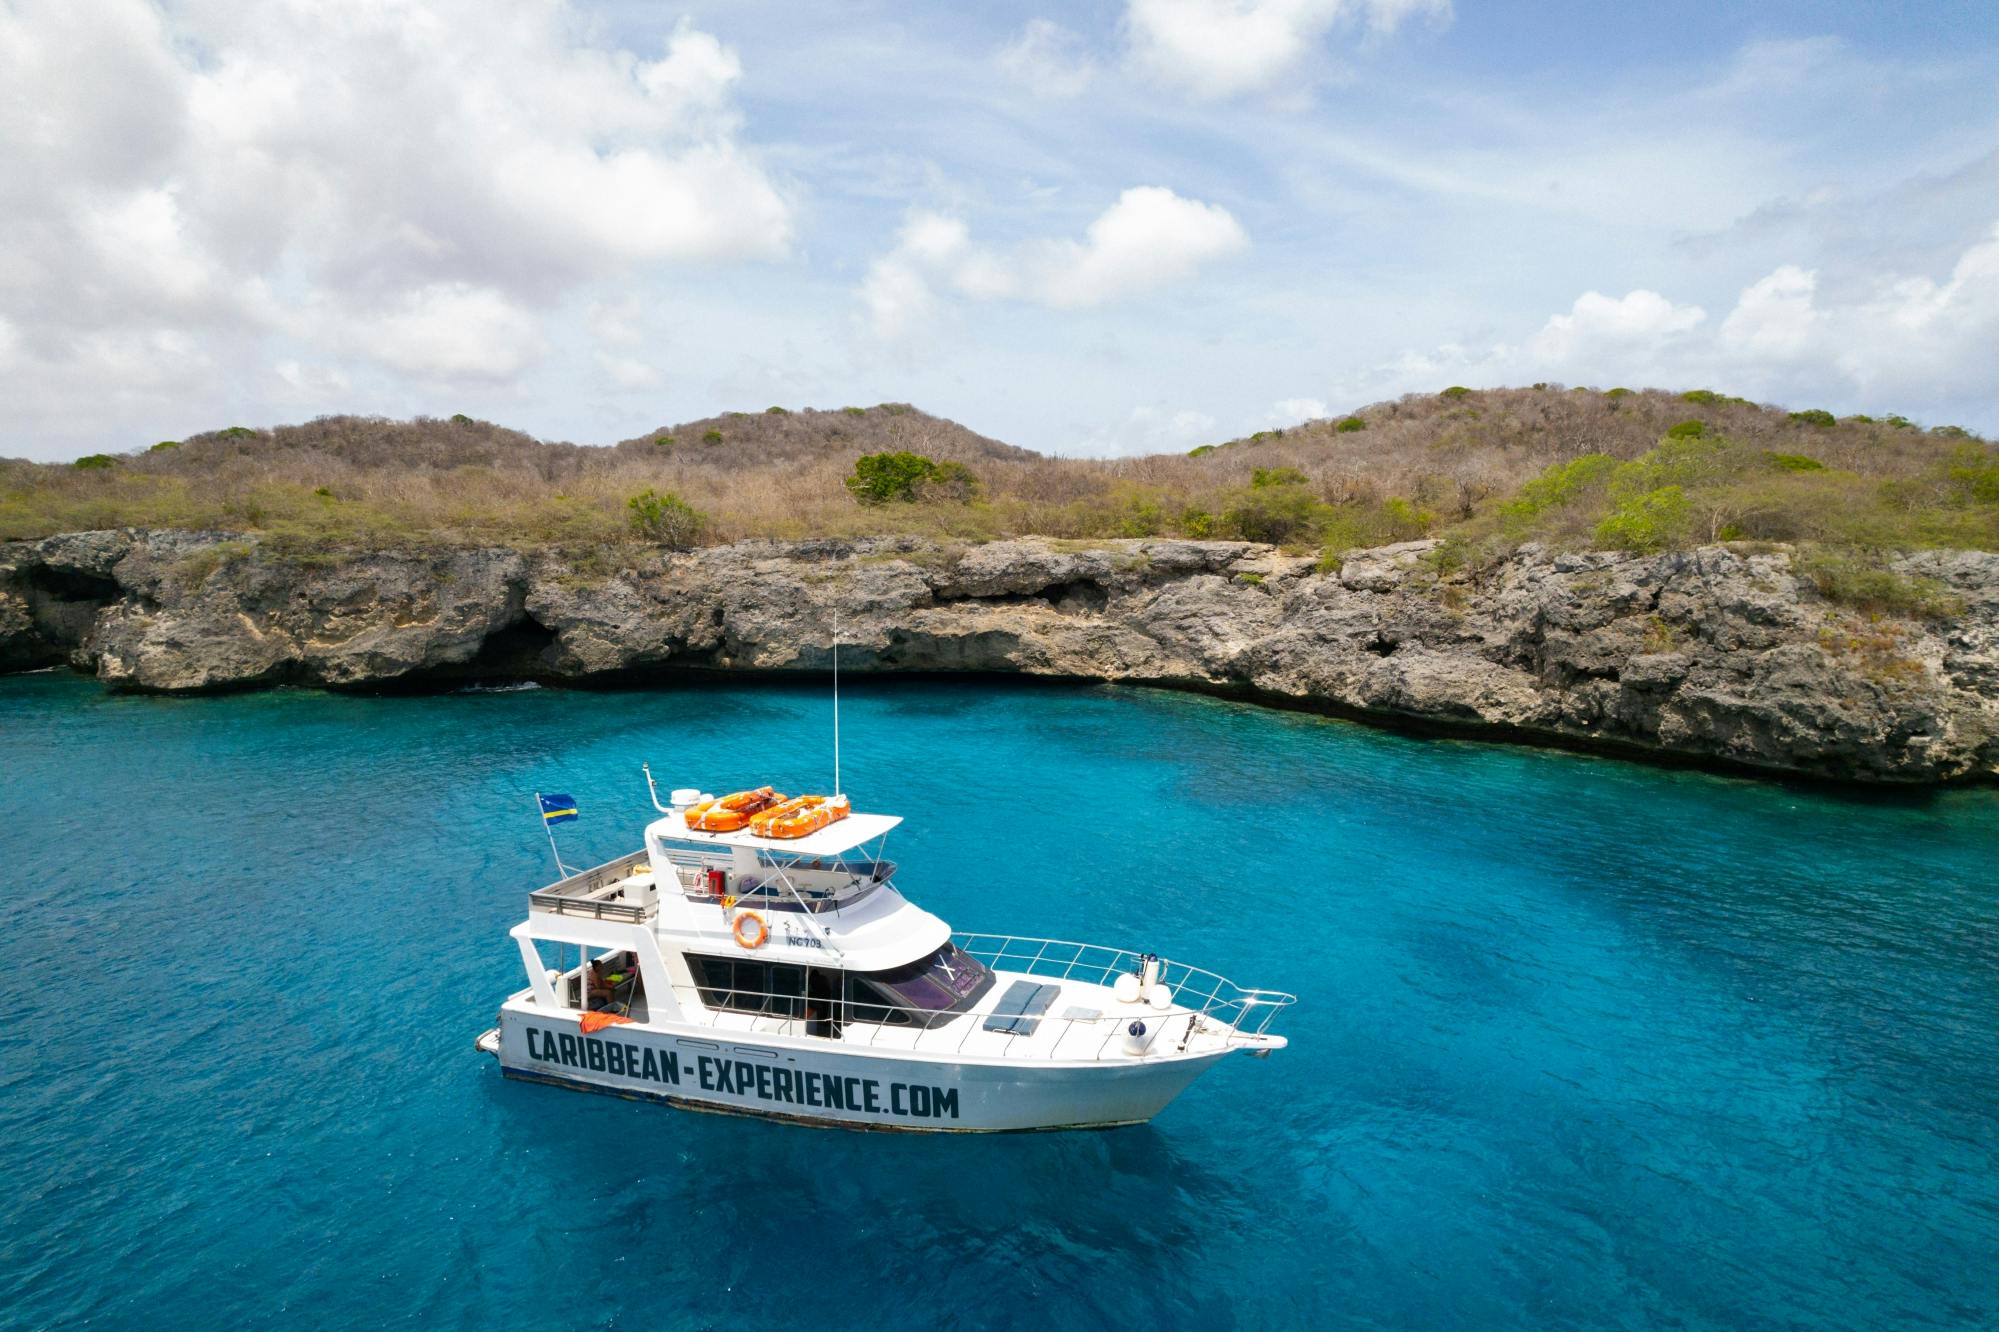 Sleepboot en blauwe kamer snorkel tour Caraïben ervaring